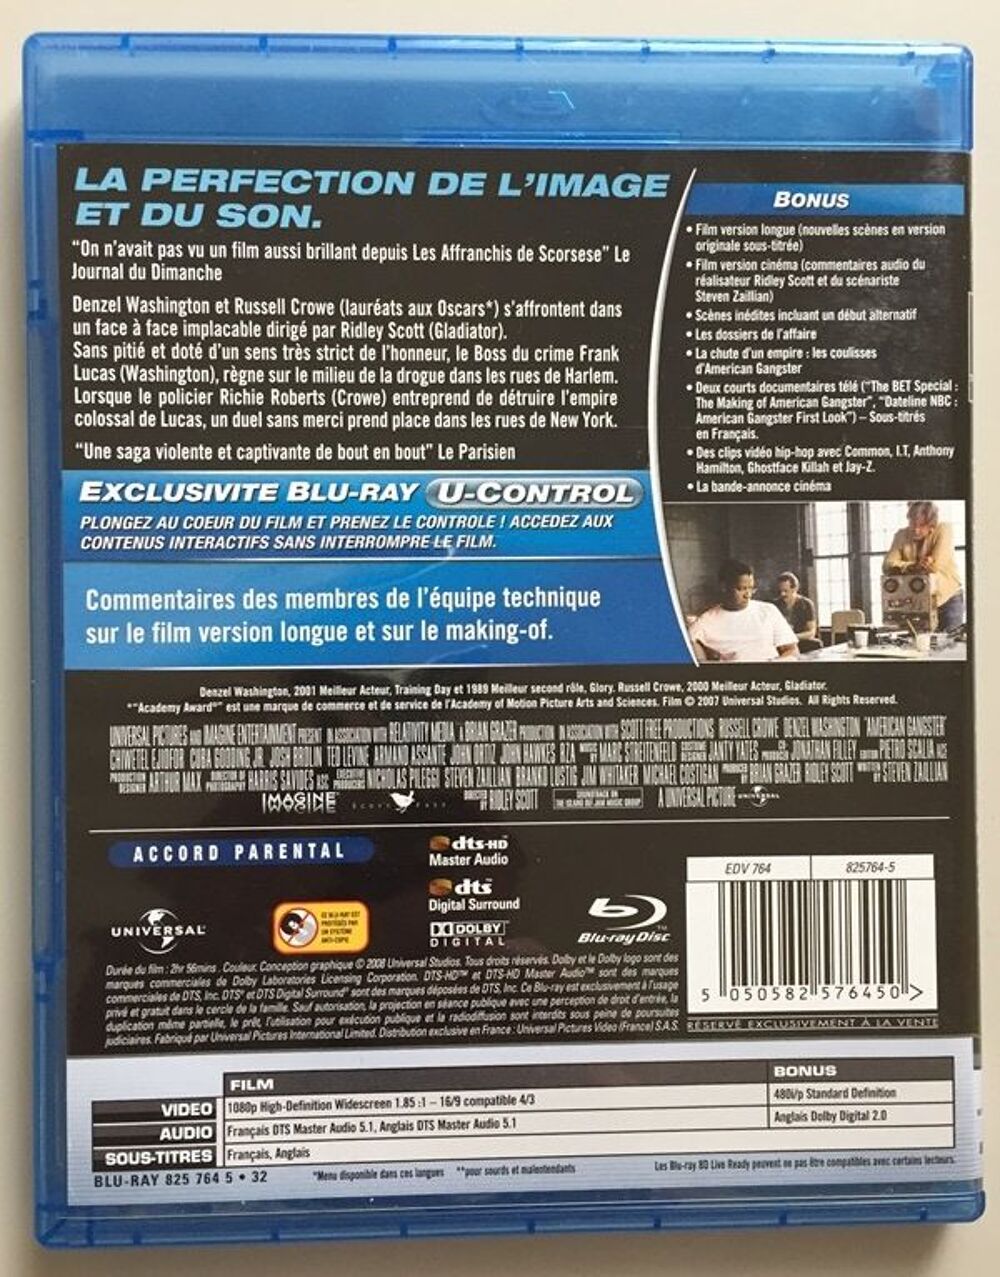 Blu-ray (bluray / DVD) American Gangster DVD et blu-ray